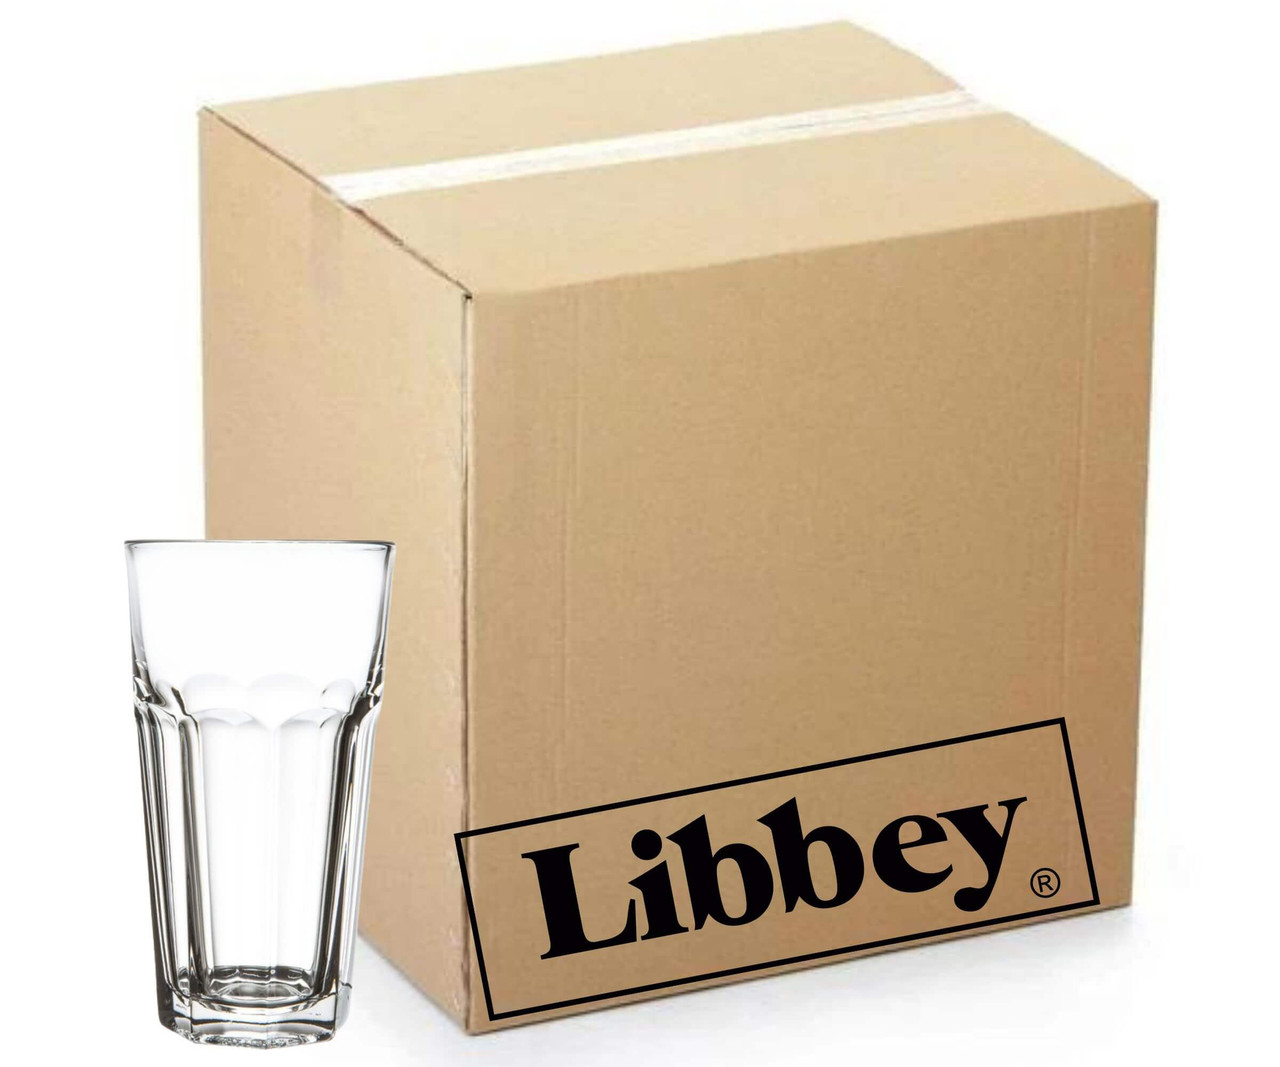 Libbey Gibraltar Iced Tea Glasses, Set of 12 & Reviews